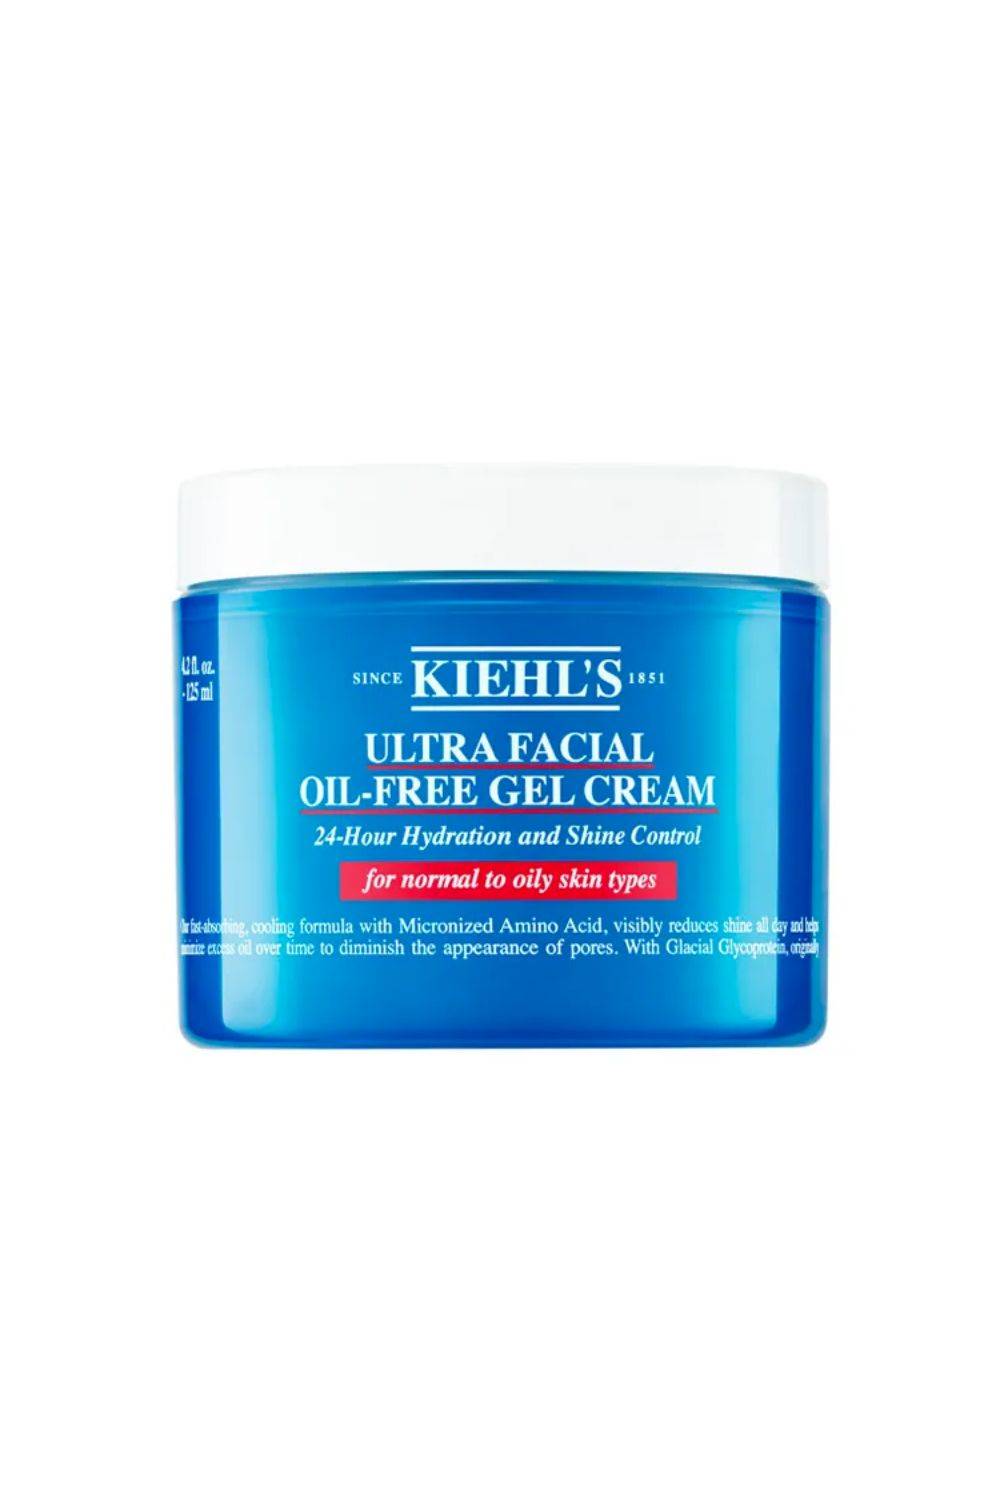 Ultra Facial Oil-Free Gel Cream Gel-crema facial matificante de Kiehl's 